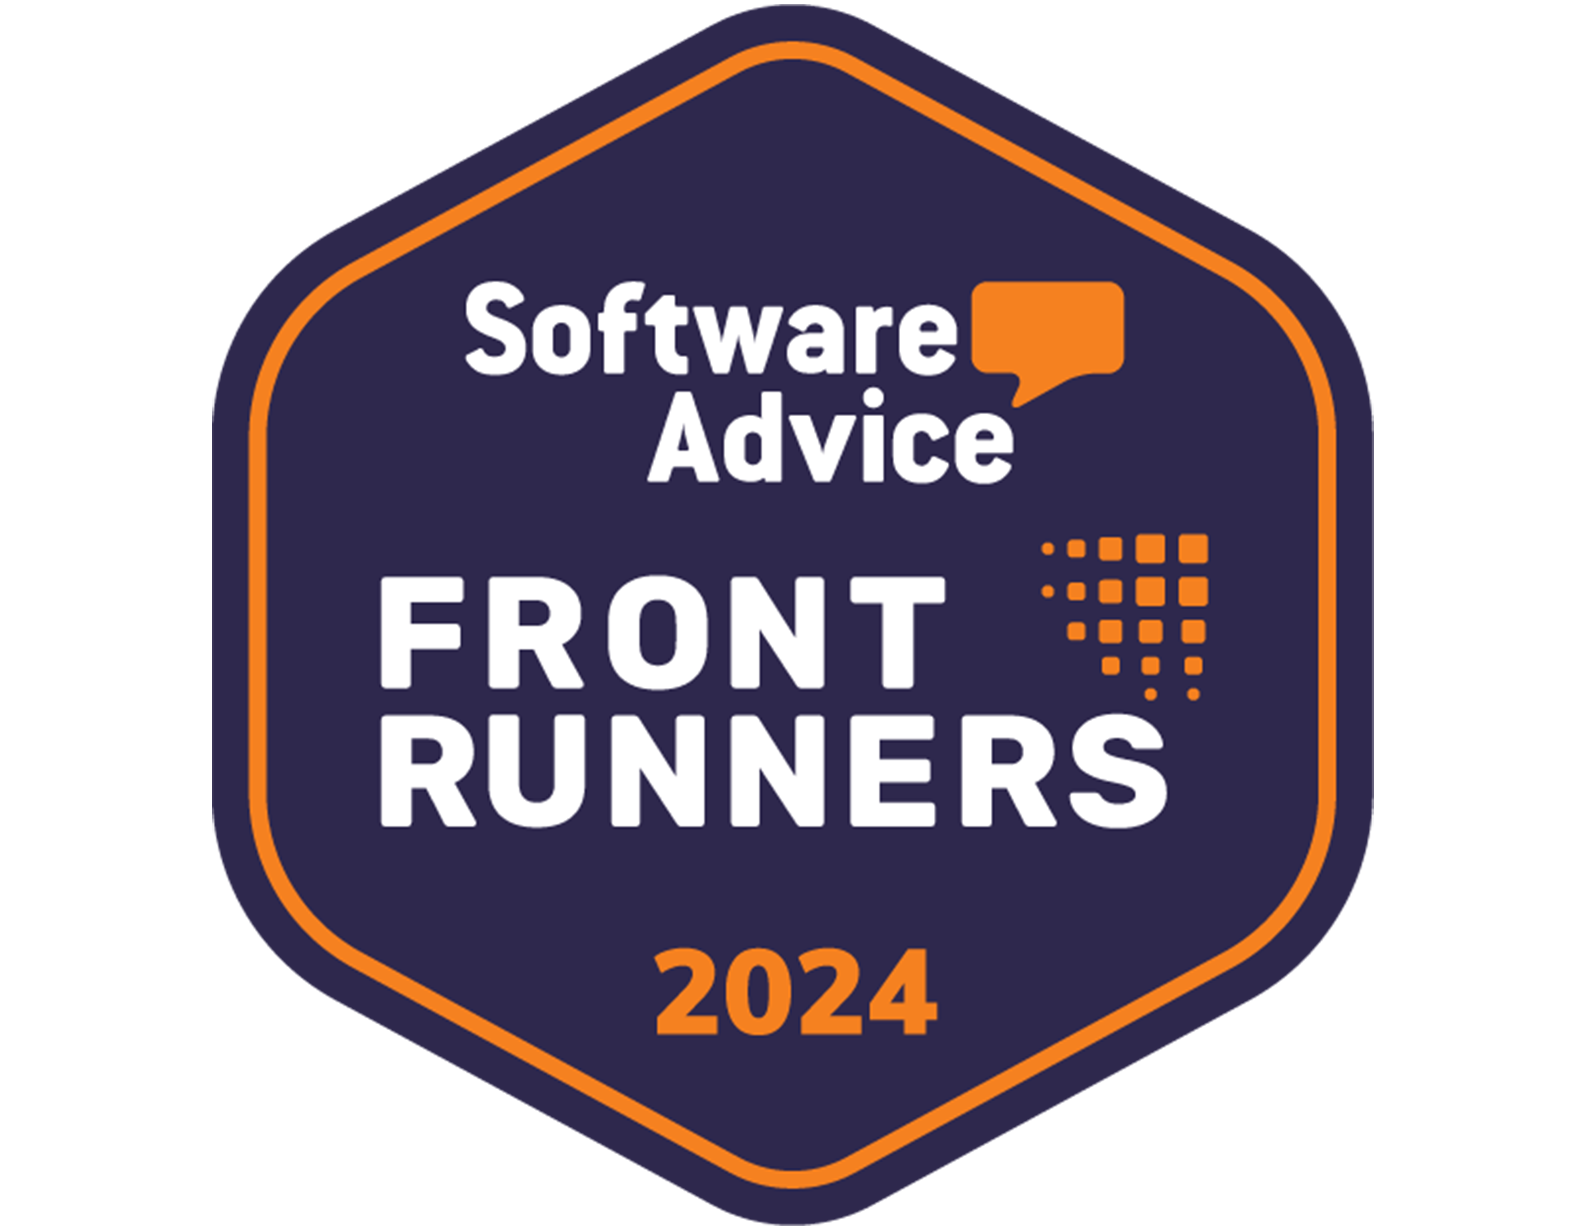 Software Advice Front Runner 2024